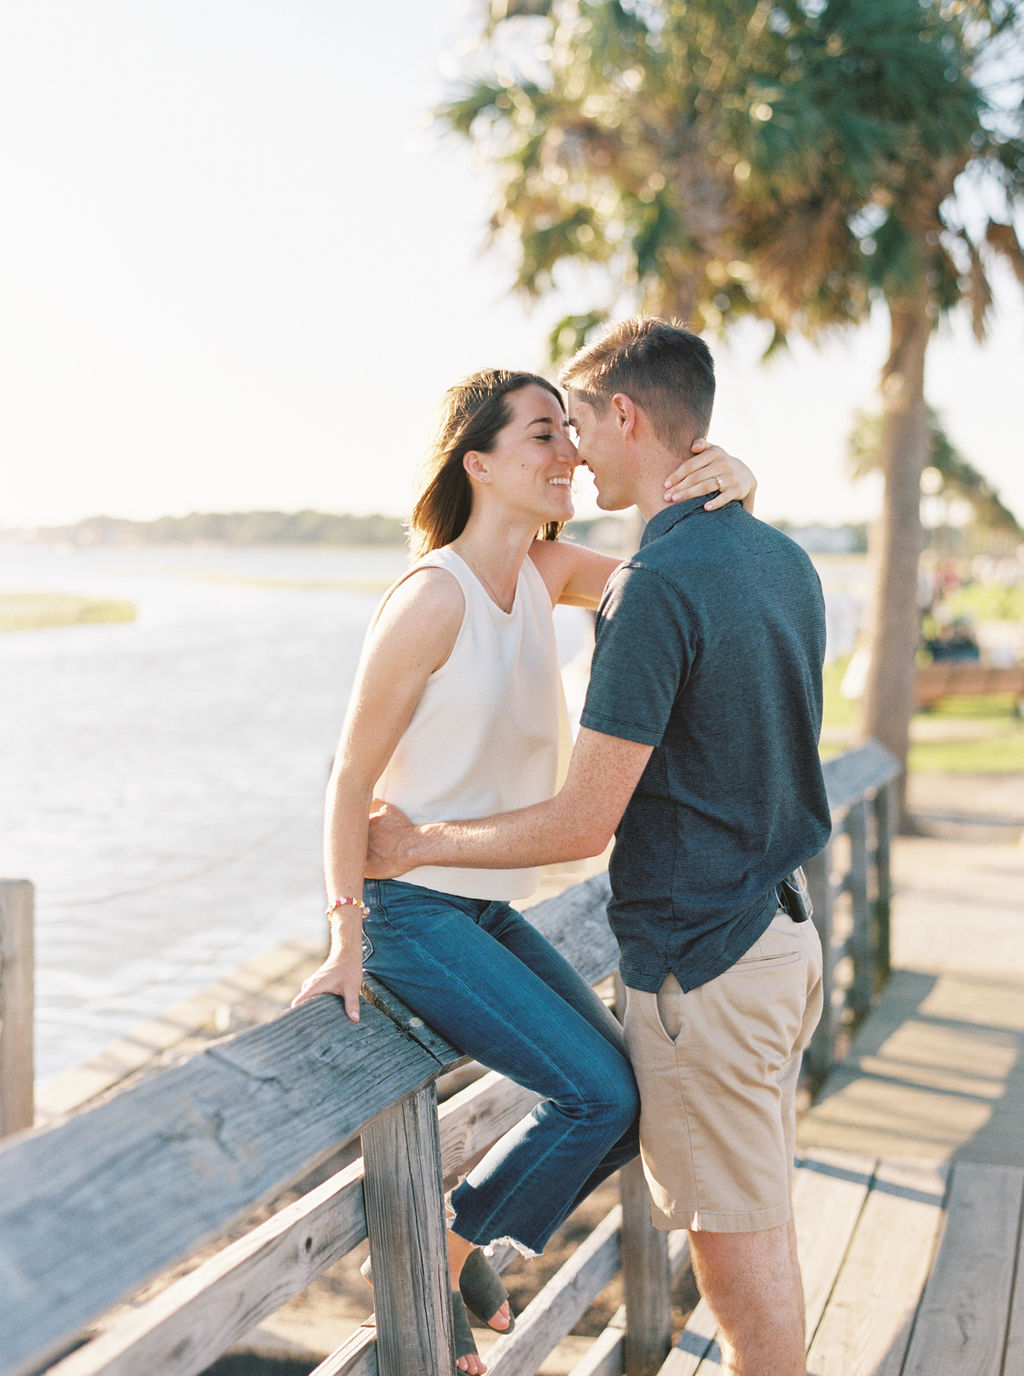 Engagement photos of Charleston photographer Abby Murphy and her fiance Hunter on Pitt Street Bridge in Mount Pleasant, South Carolina